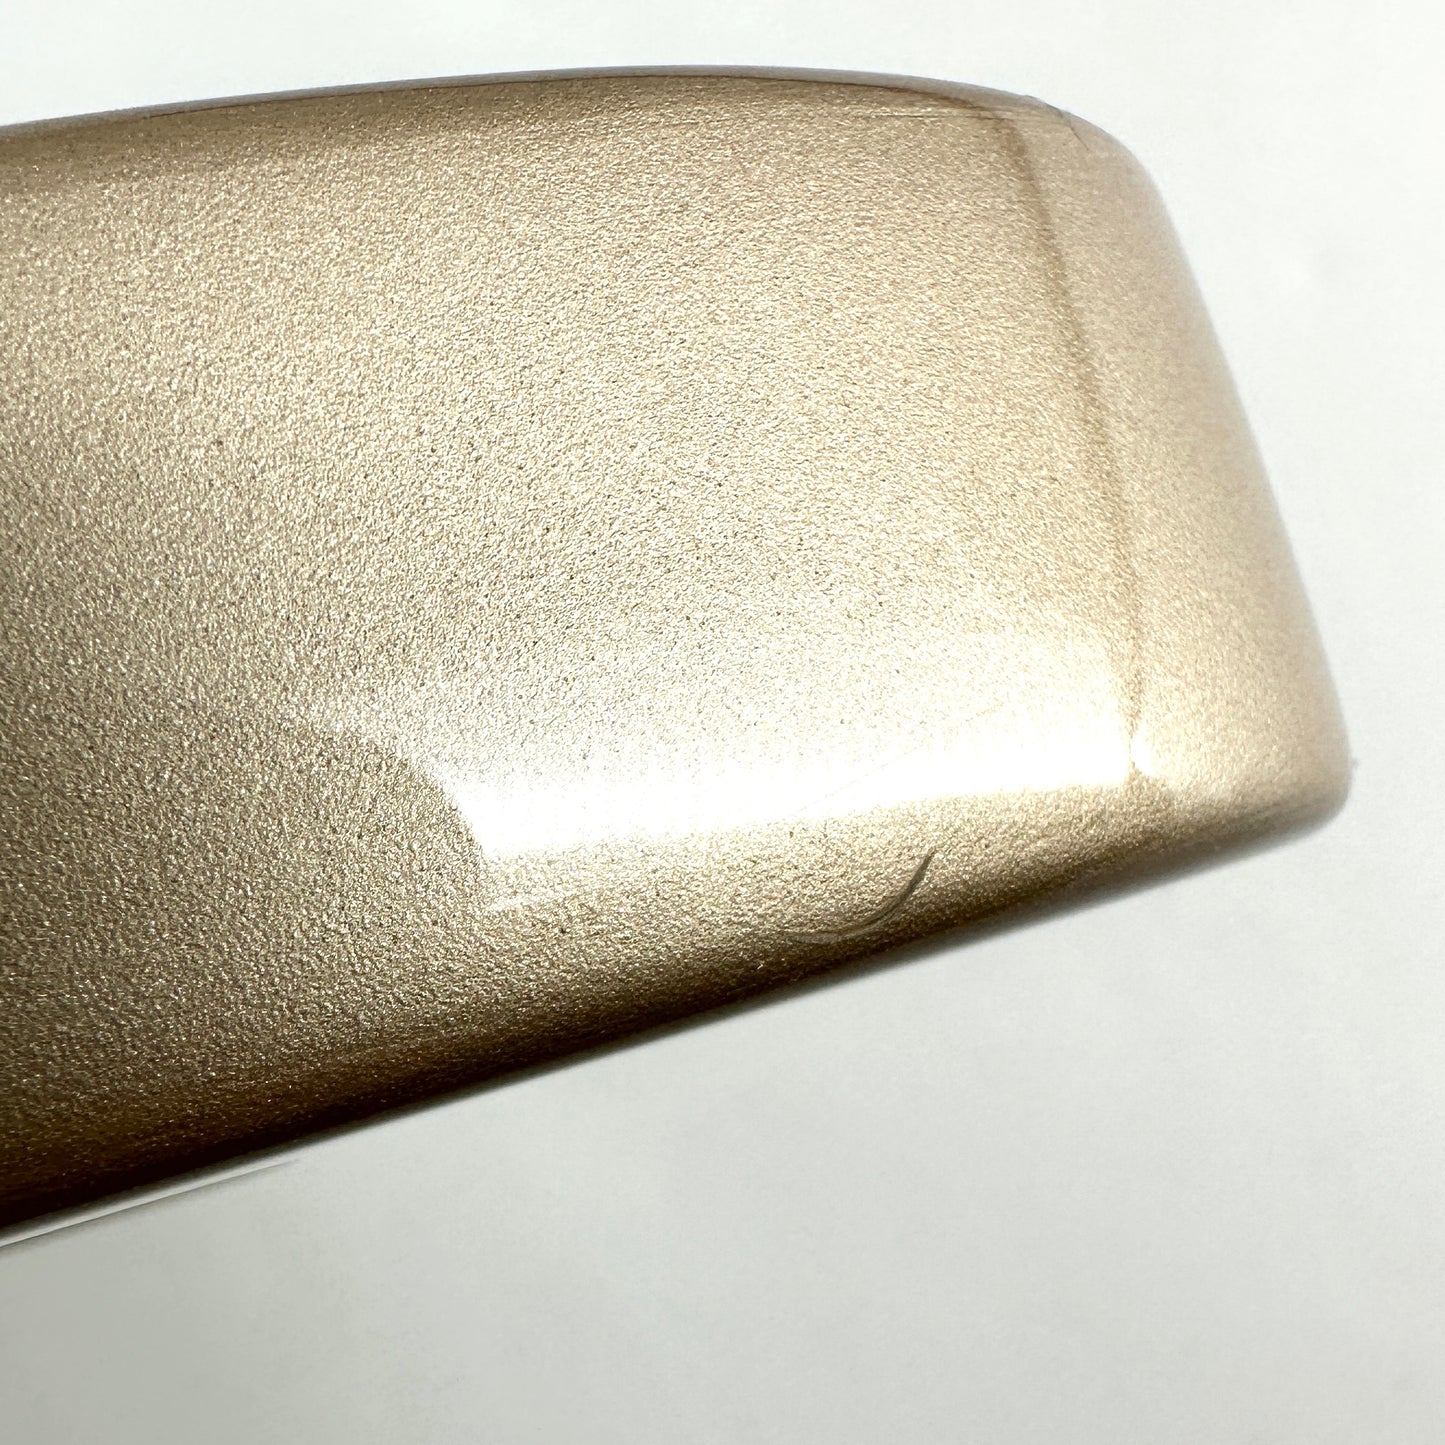 2016 Epiphone Joe Bonamassa Limited Edition Firebird 1 Treasure - Polymist Gold